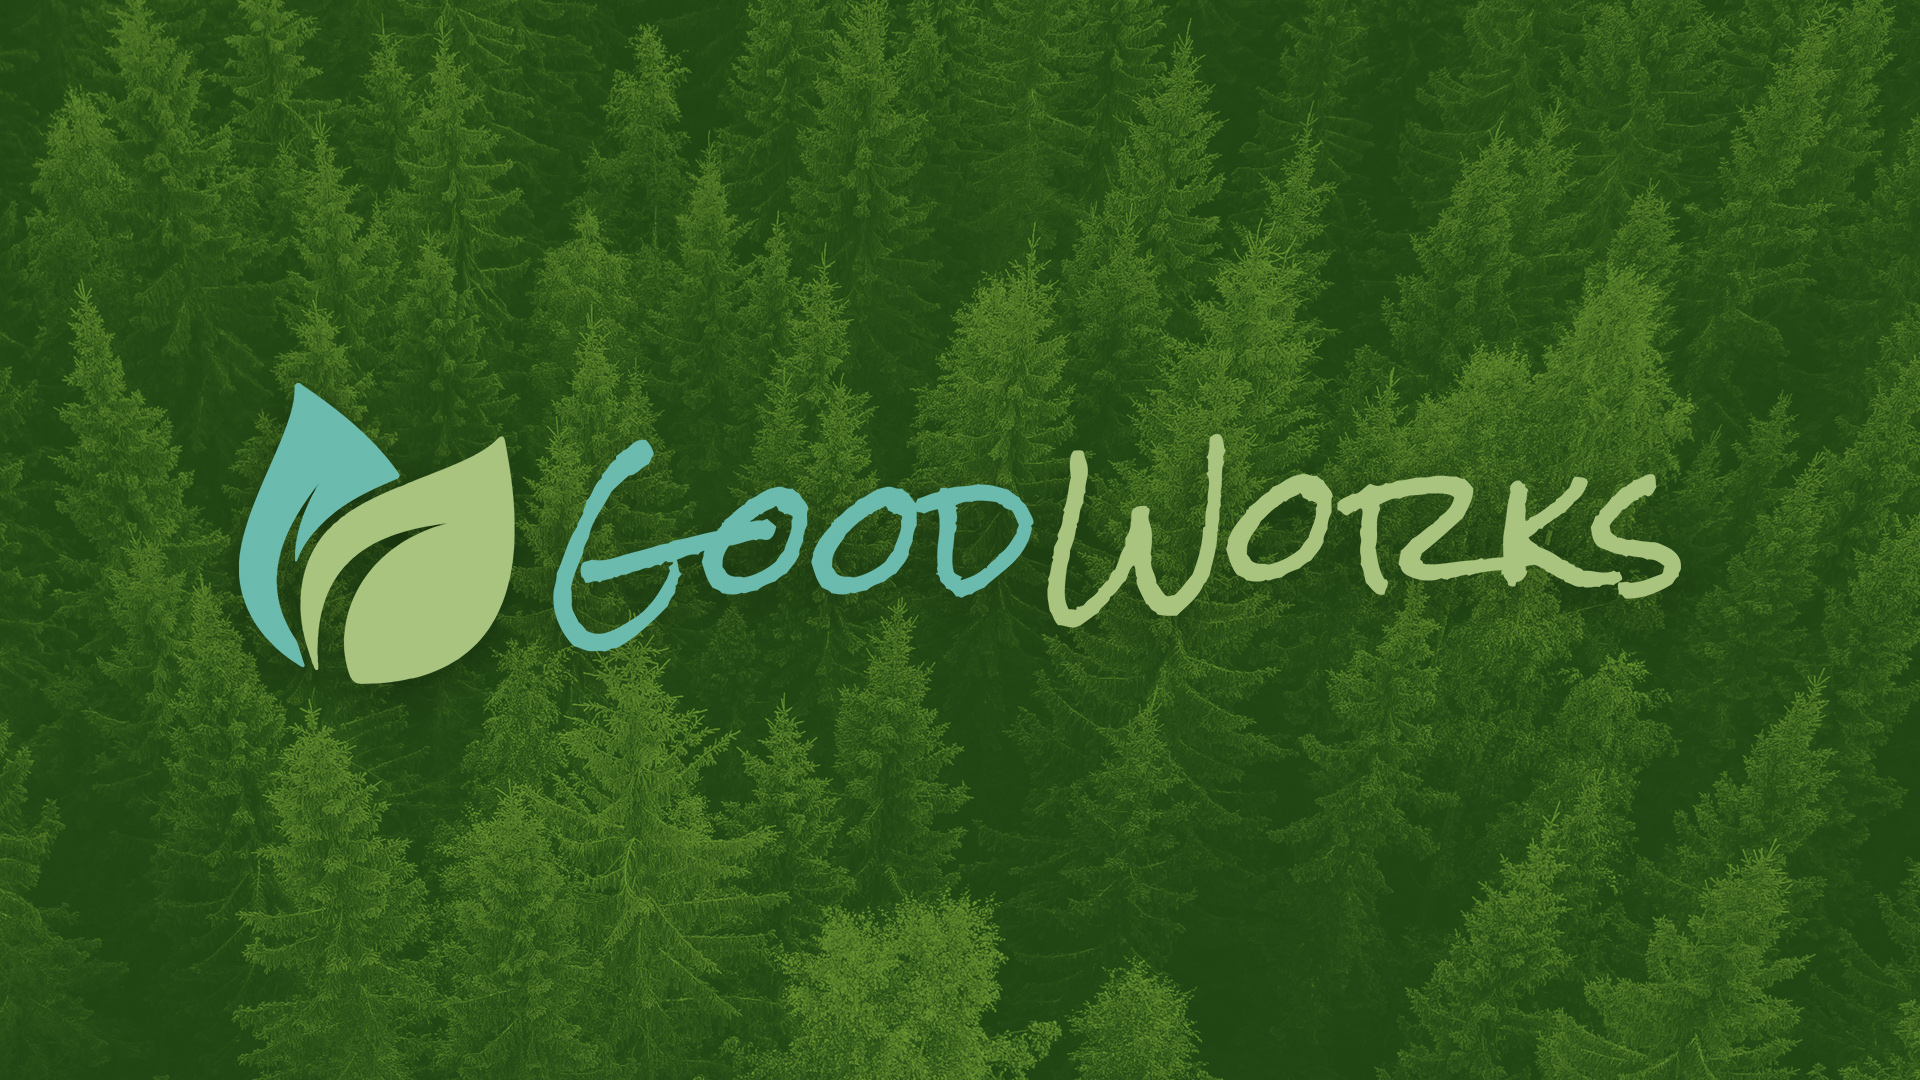 GoodWorks